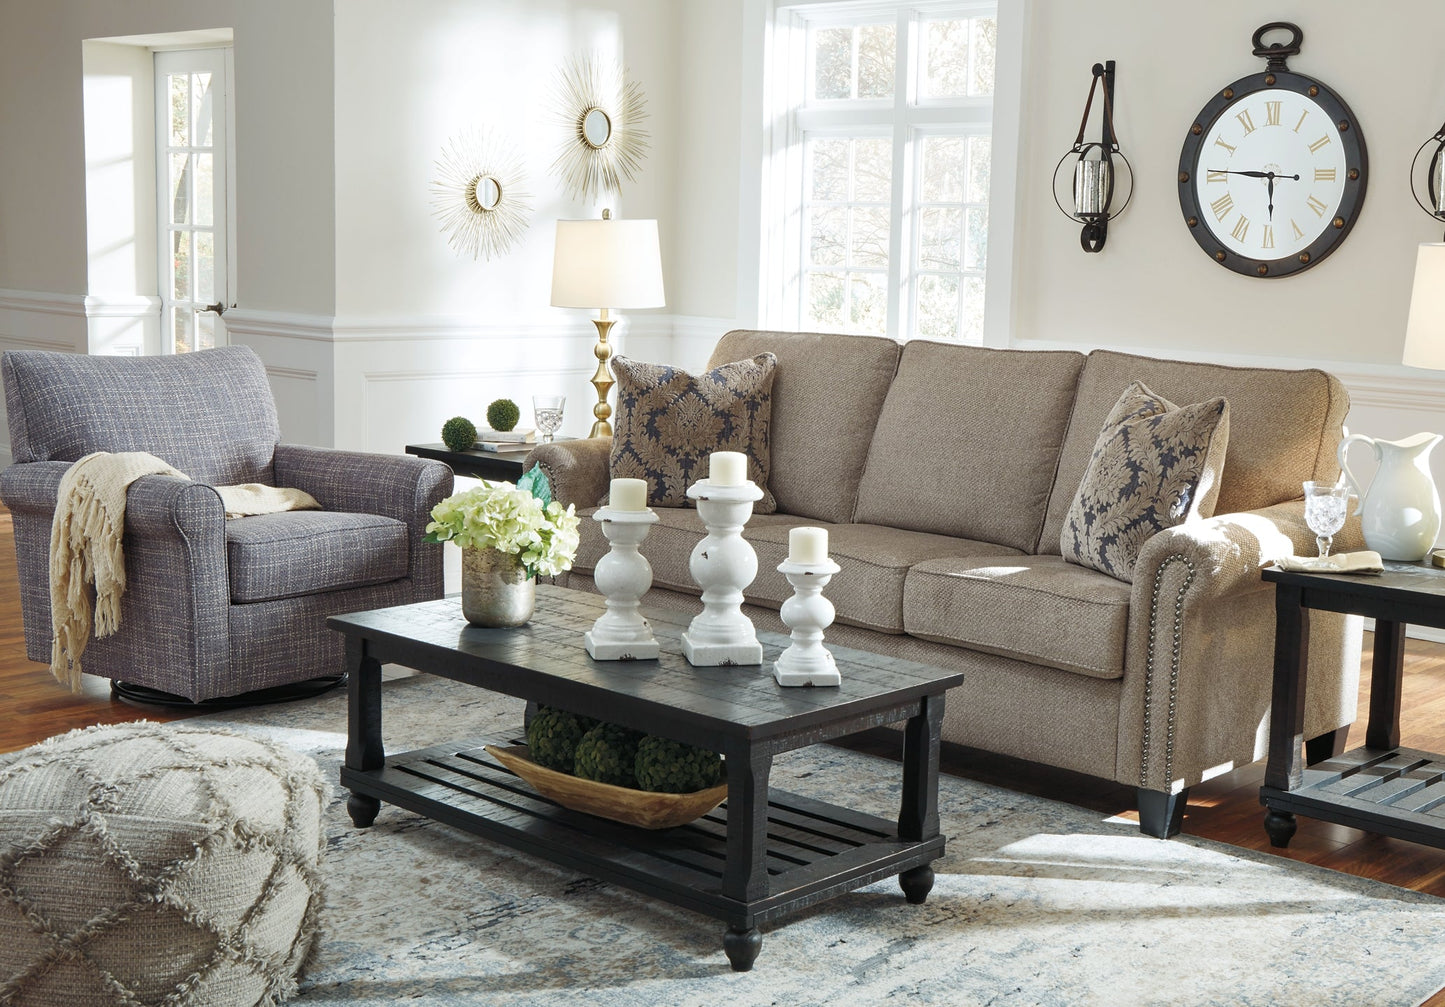 Renley Swivel Glider Accent Chair at Cloud 9 Mattress & Furniture furniture, home furnishing, home decor